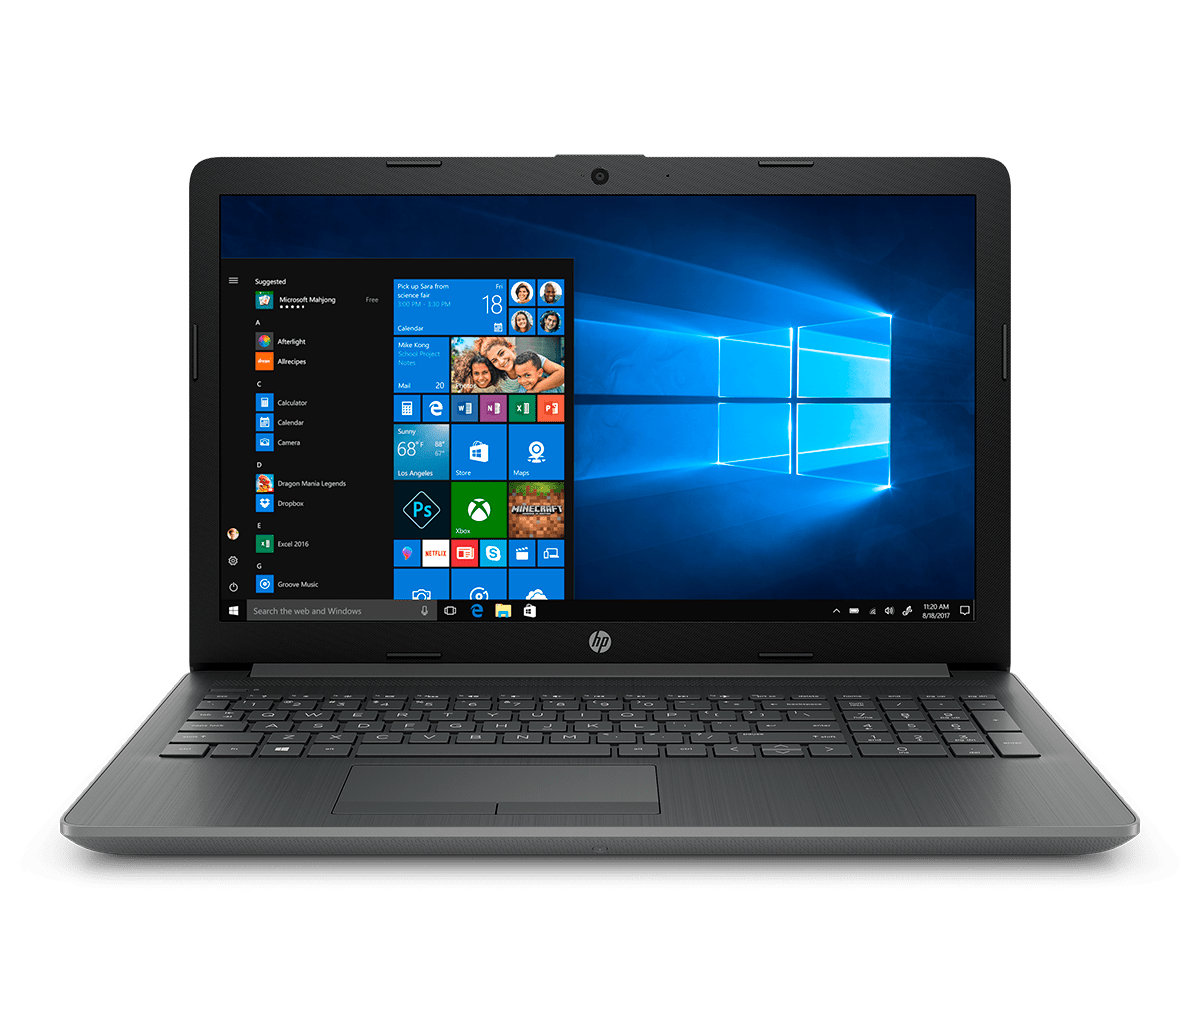 Portátil Laptop HP, i5 de 8va, 4ram, 1tb hdd + 256Gb Ssd